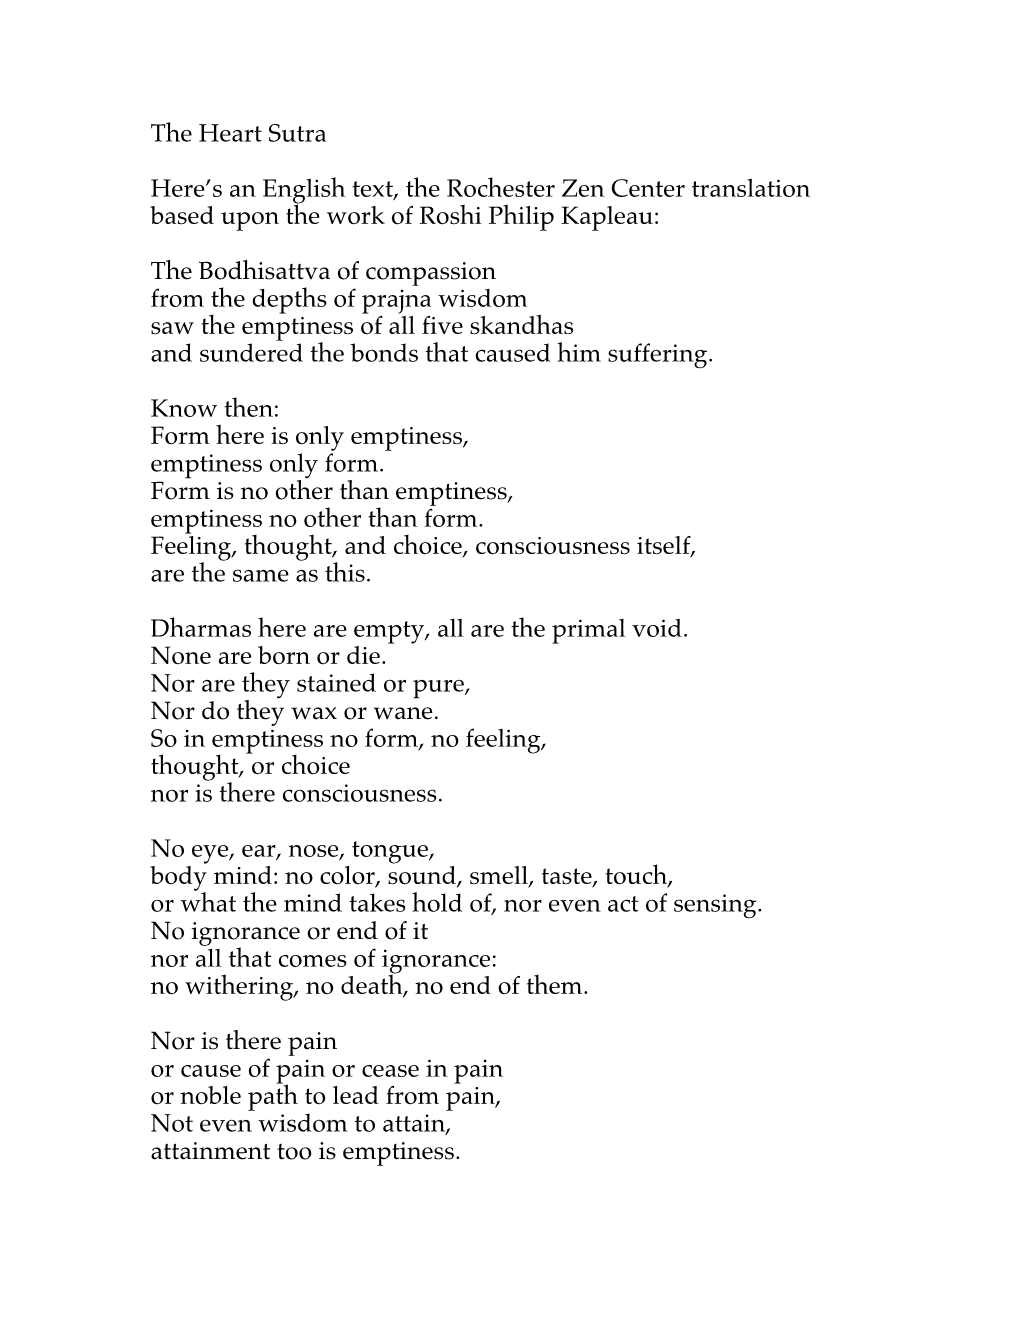 The Heart Sutra Here's an English Text, the Rochester Zen Center